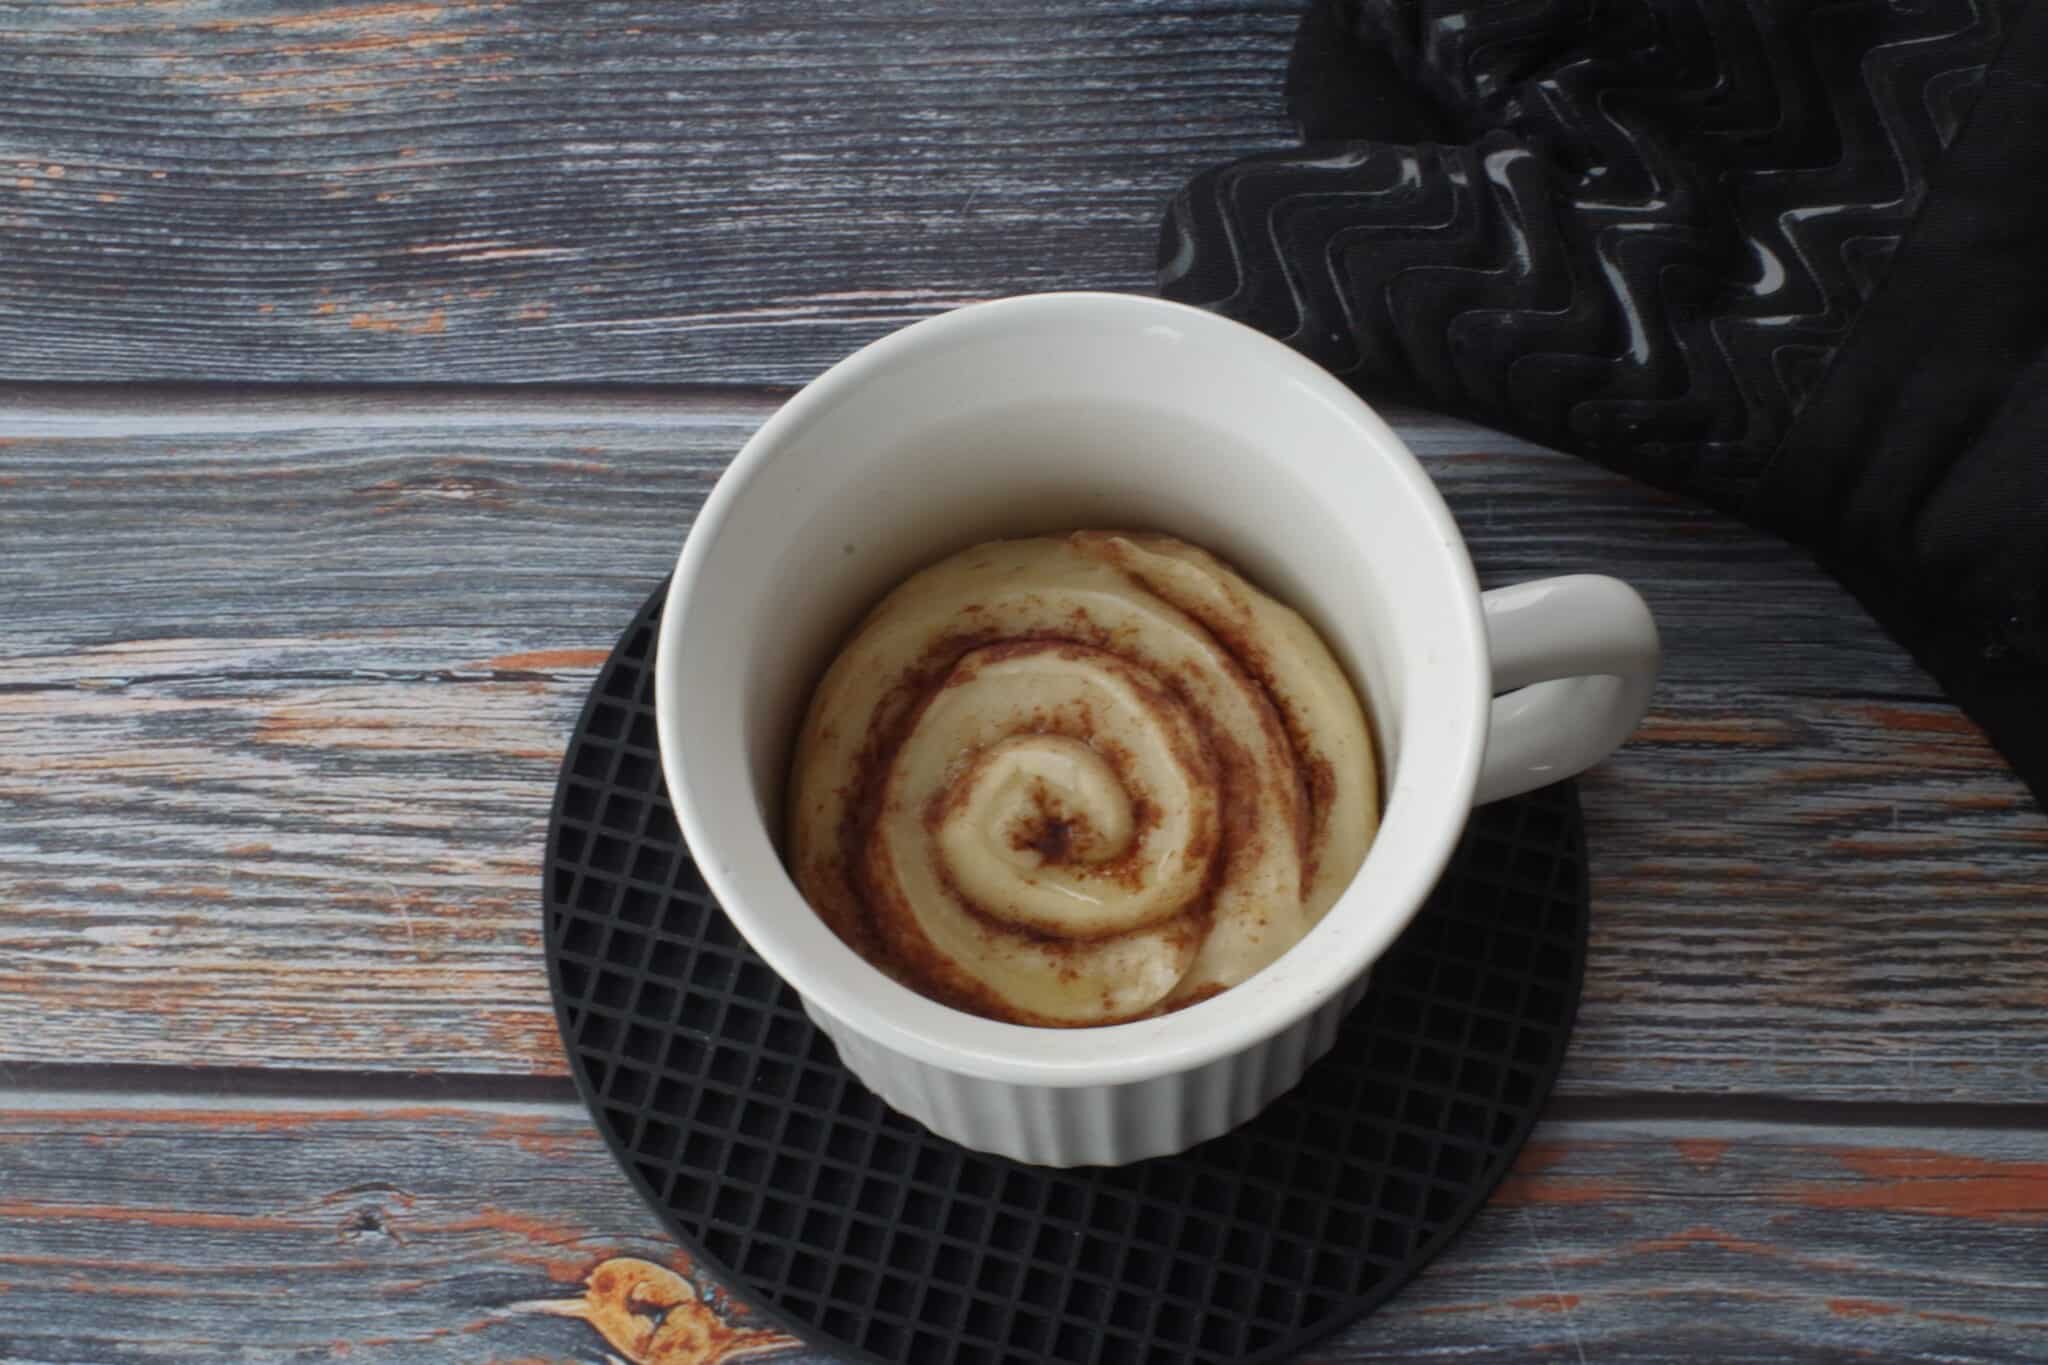 Baked cinnamon roll in meal mug on black round trivet